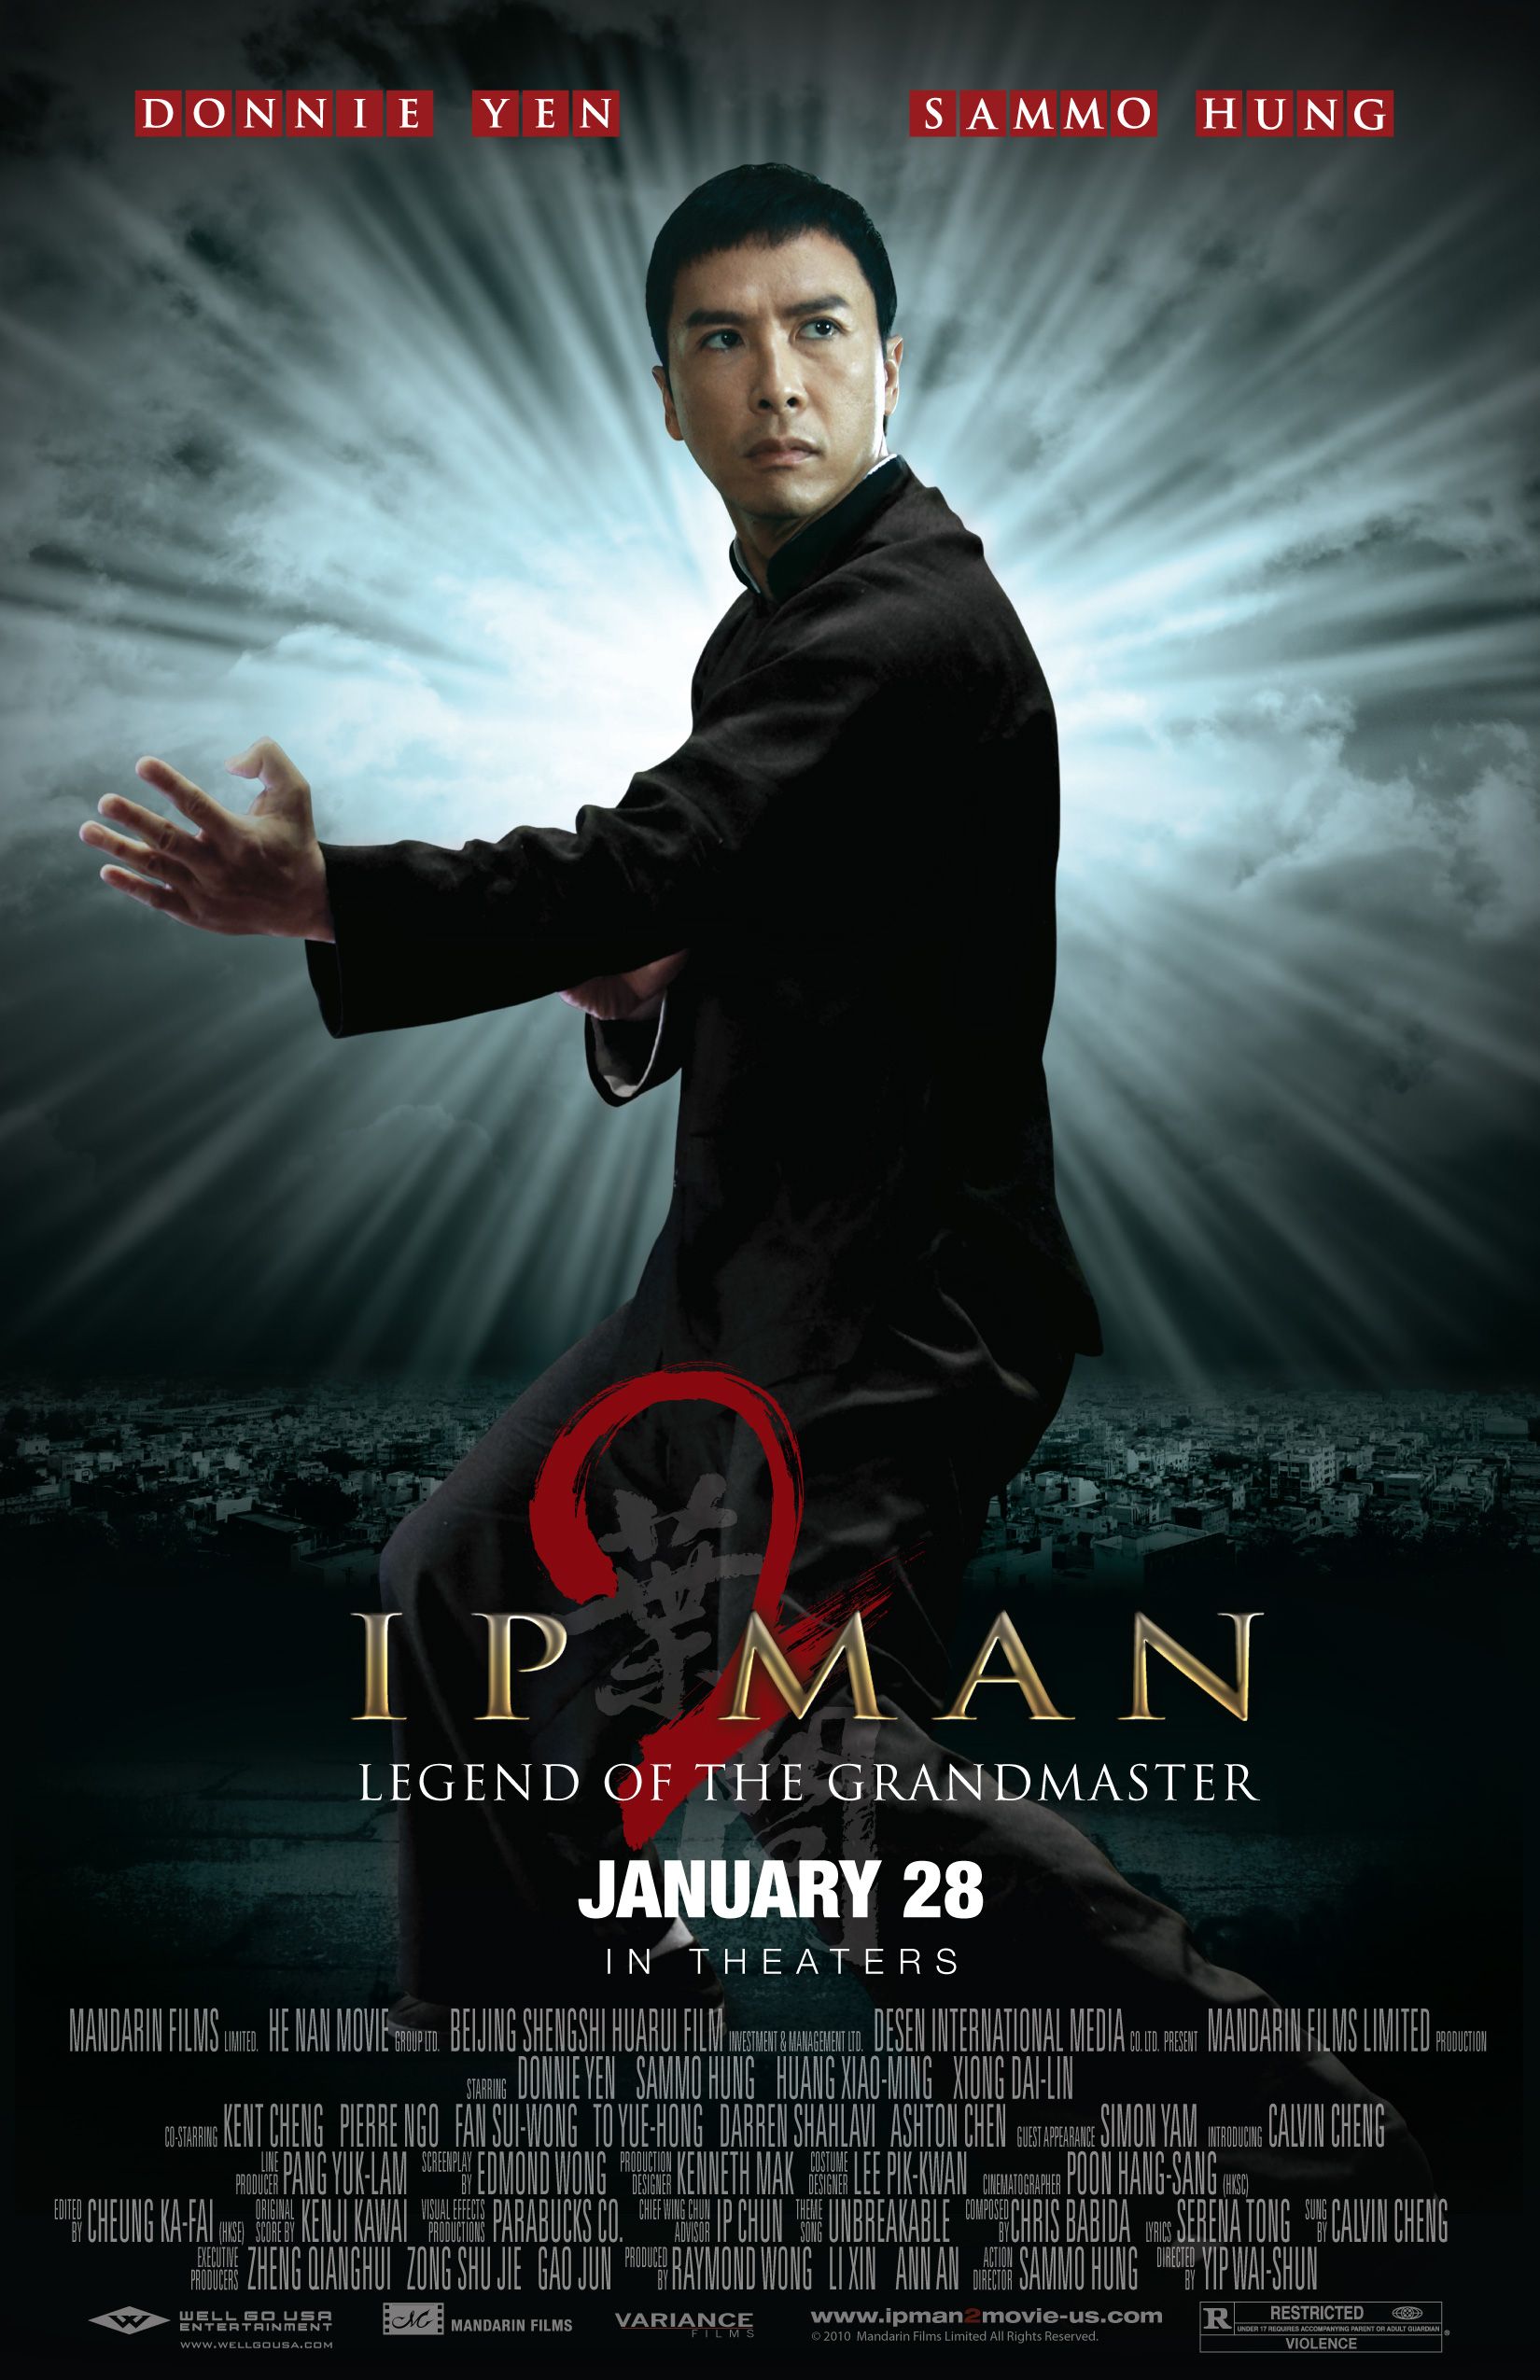 Ip Man 2 (2010) Hindi Dubbed Full Movie